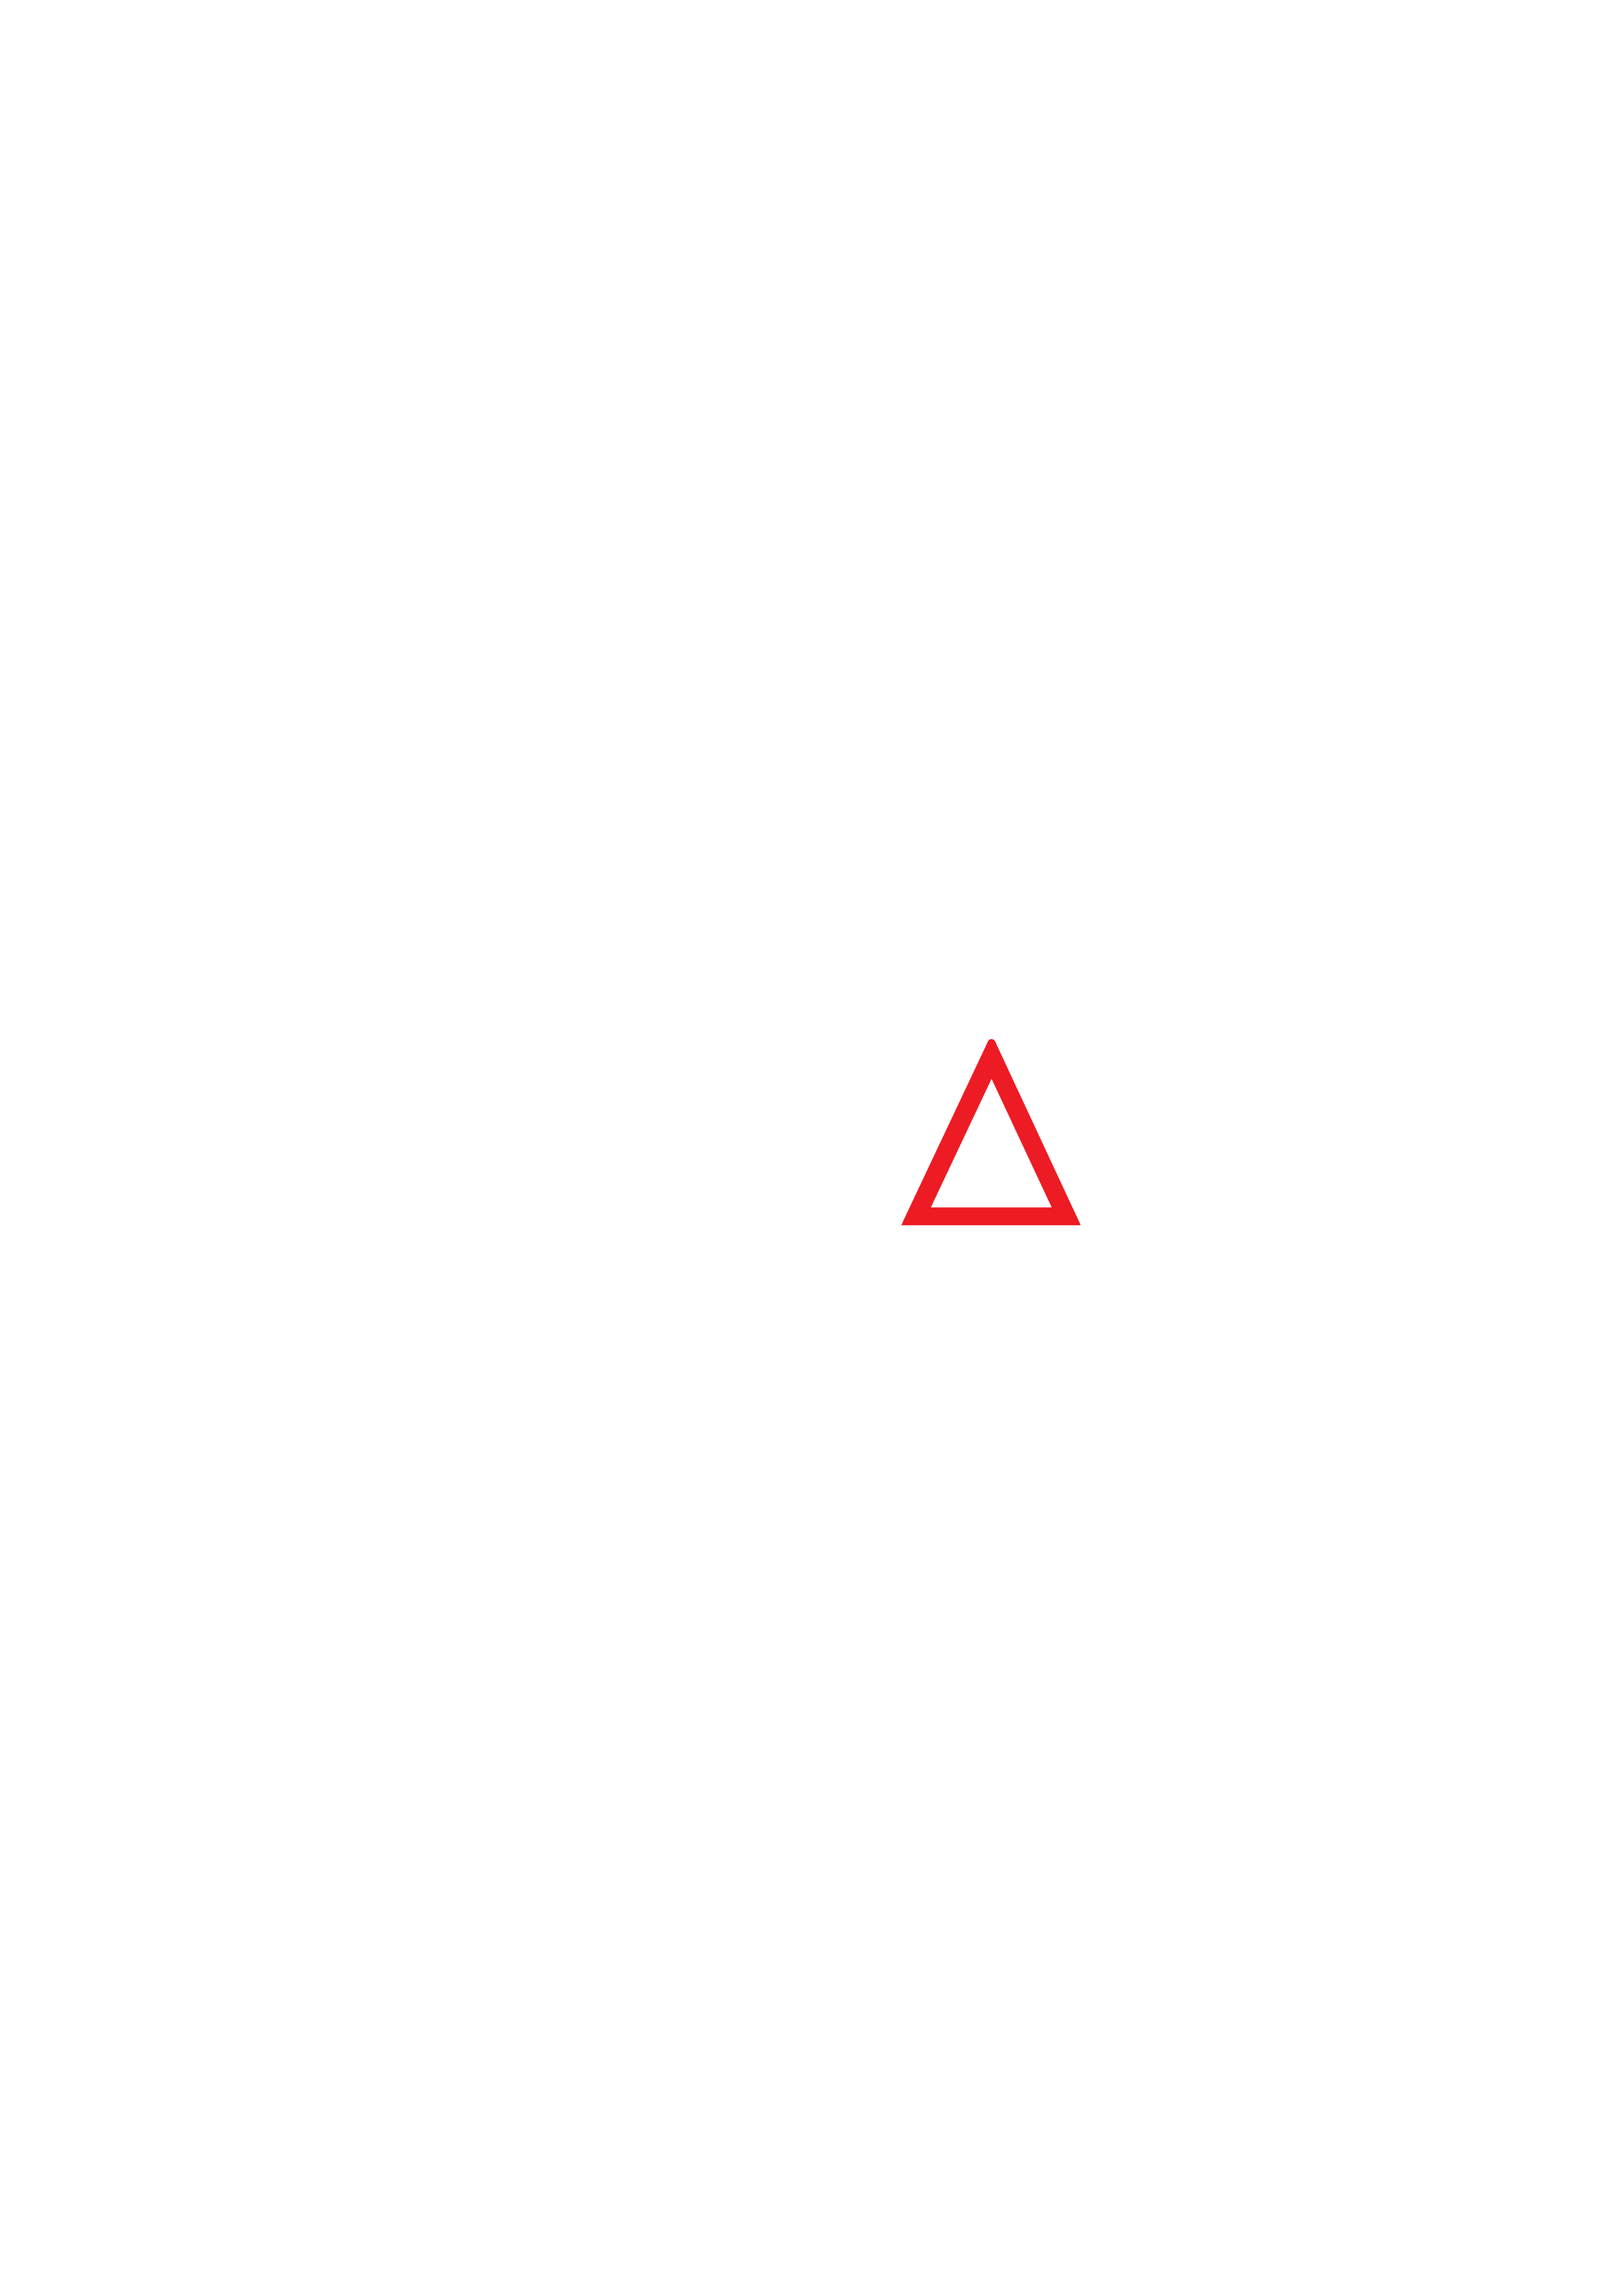 The Steadies